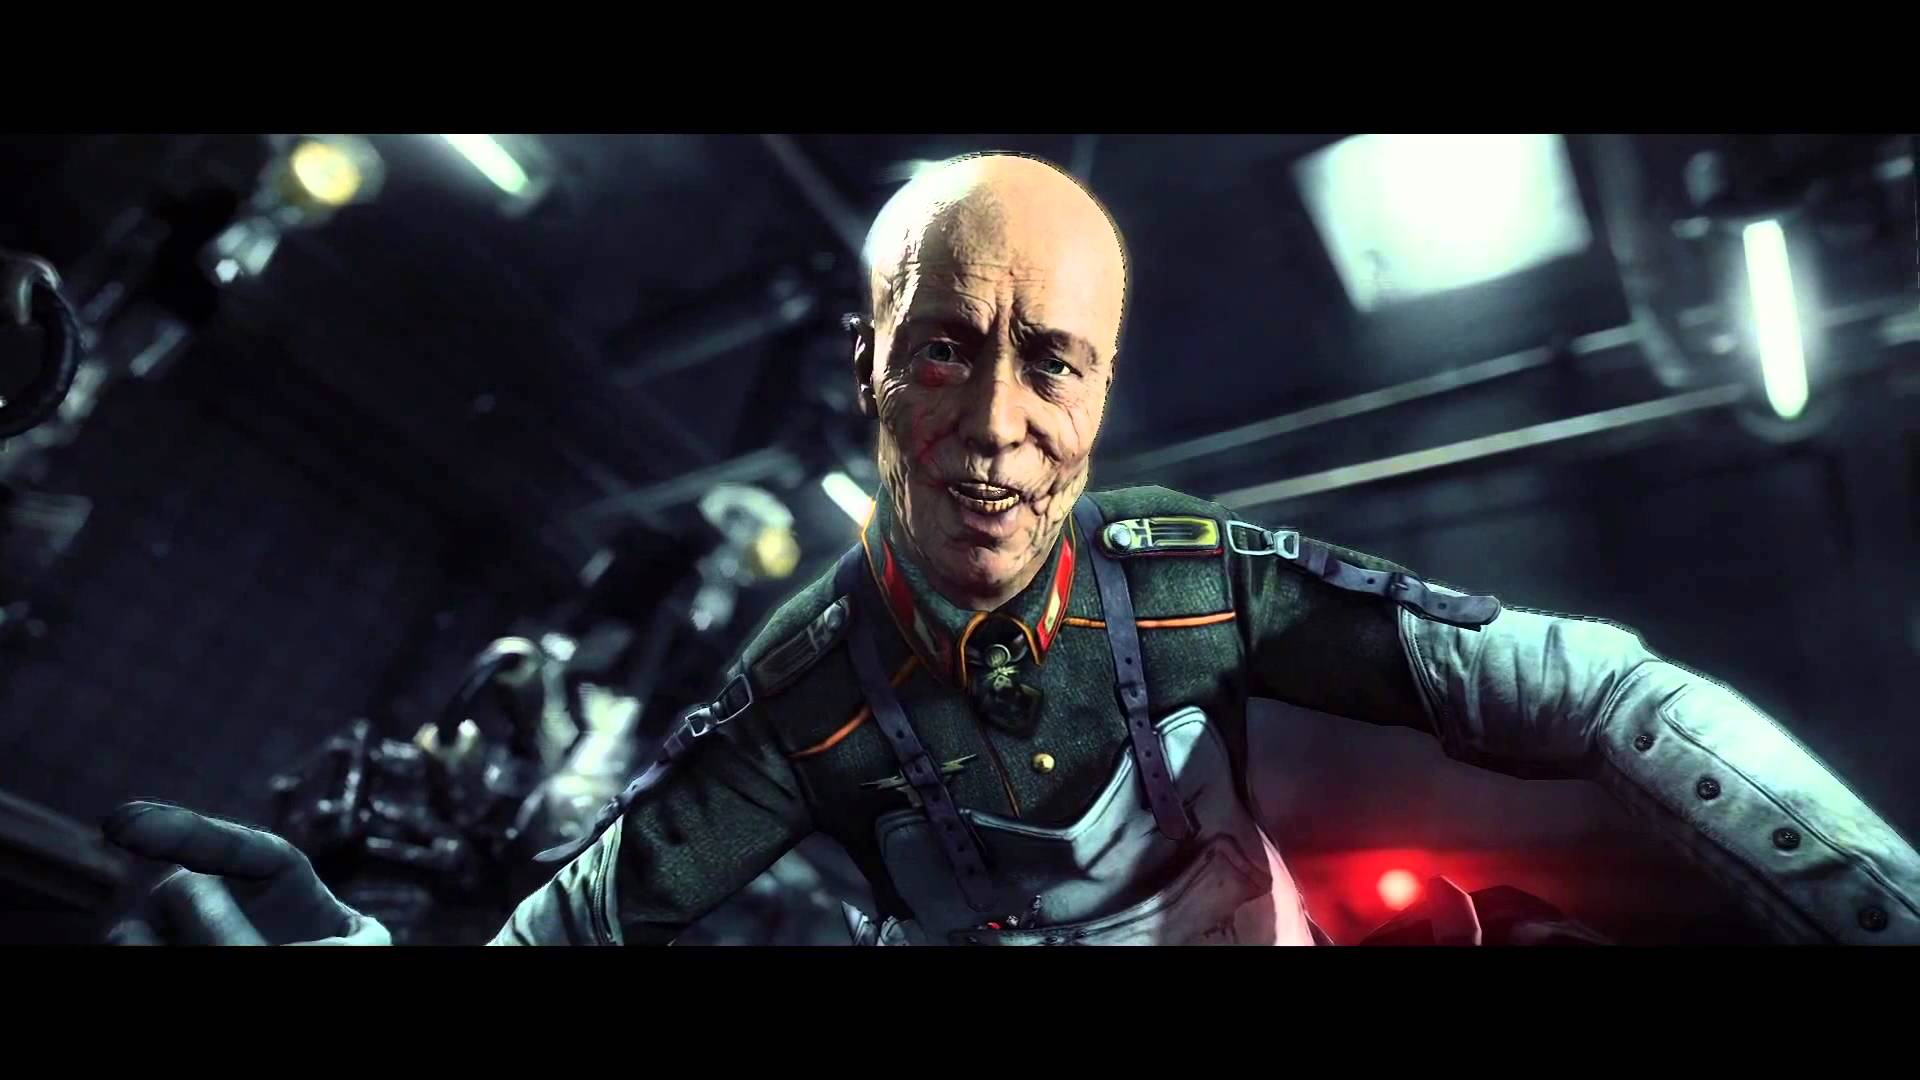 Wolfenstein: The New Order release date, crazy bloody trailer revealed -  GameSpot